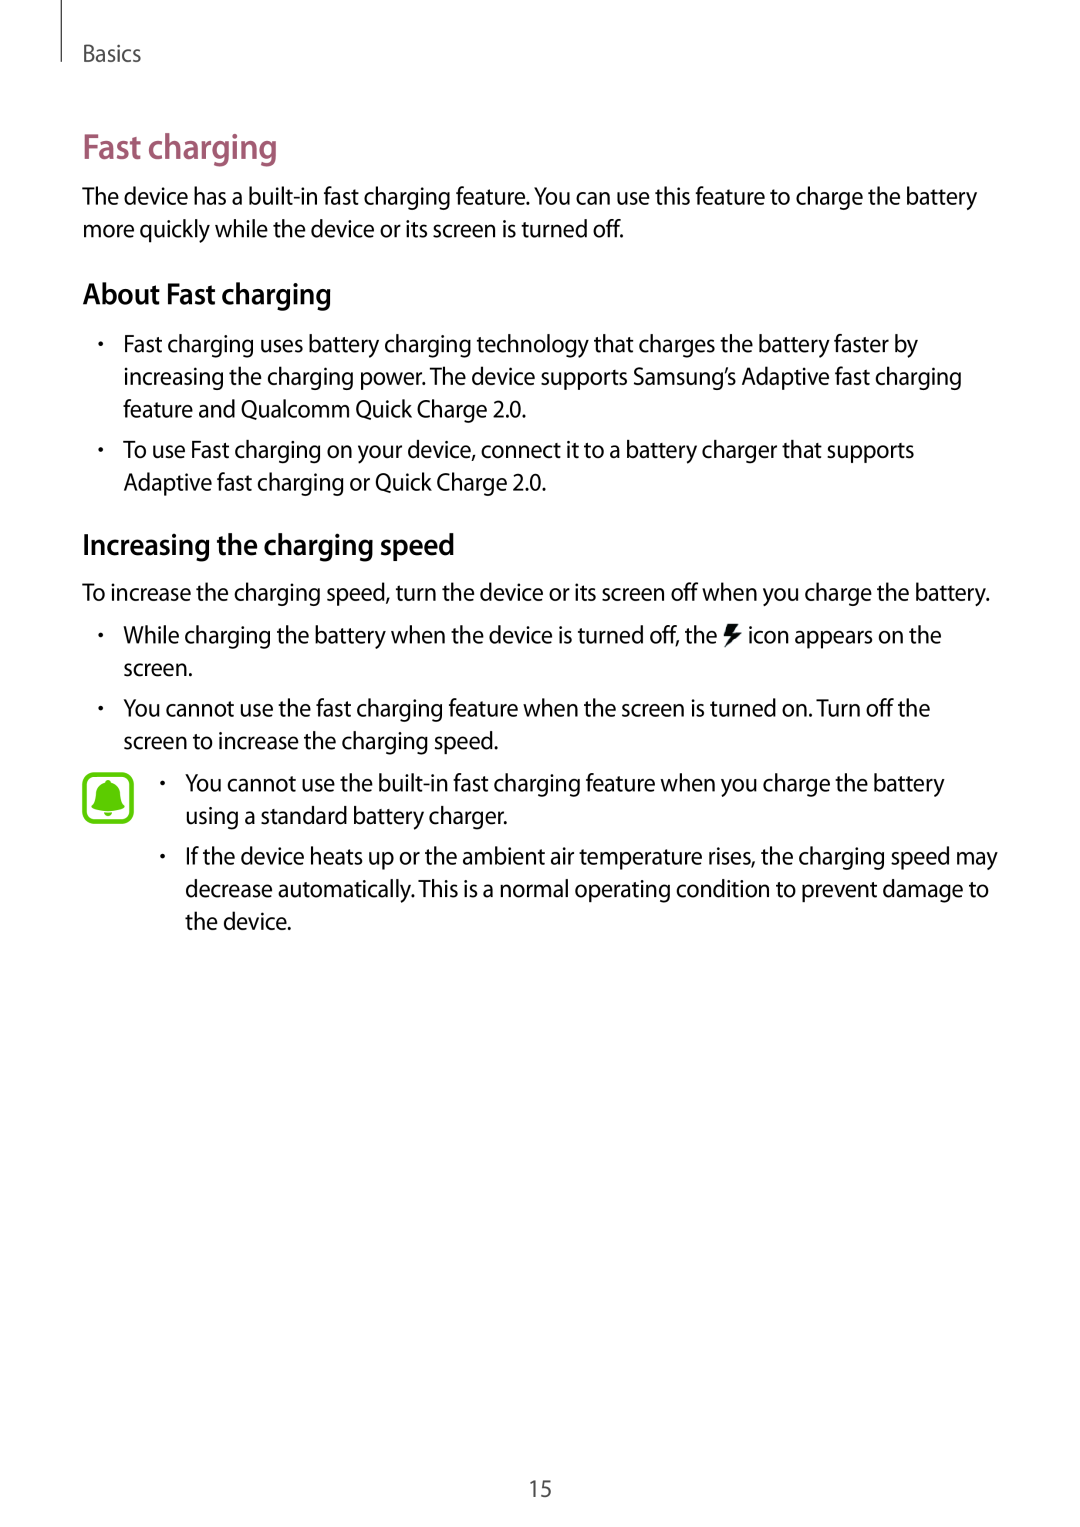 Samsung SM-G920FZKAITV, SM-G920FZKFDBT, SM-G920FZKEDBT manual About Fast charging, Increasing the charging speed, Basics 